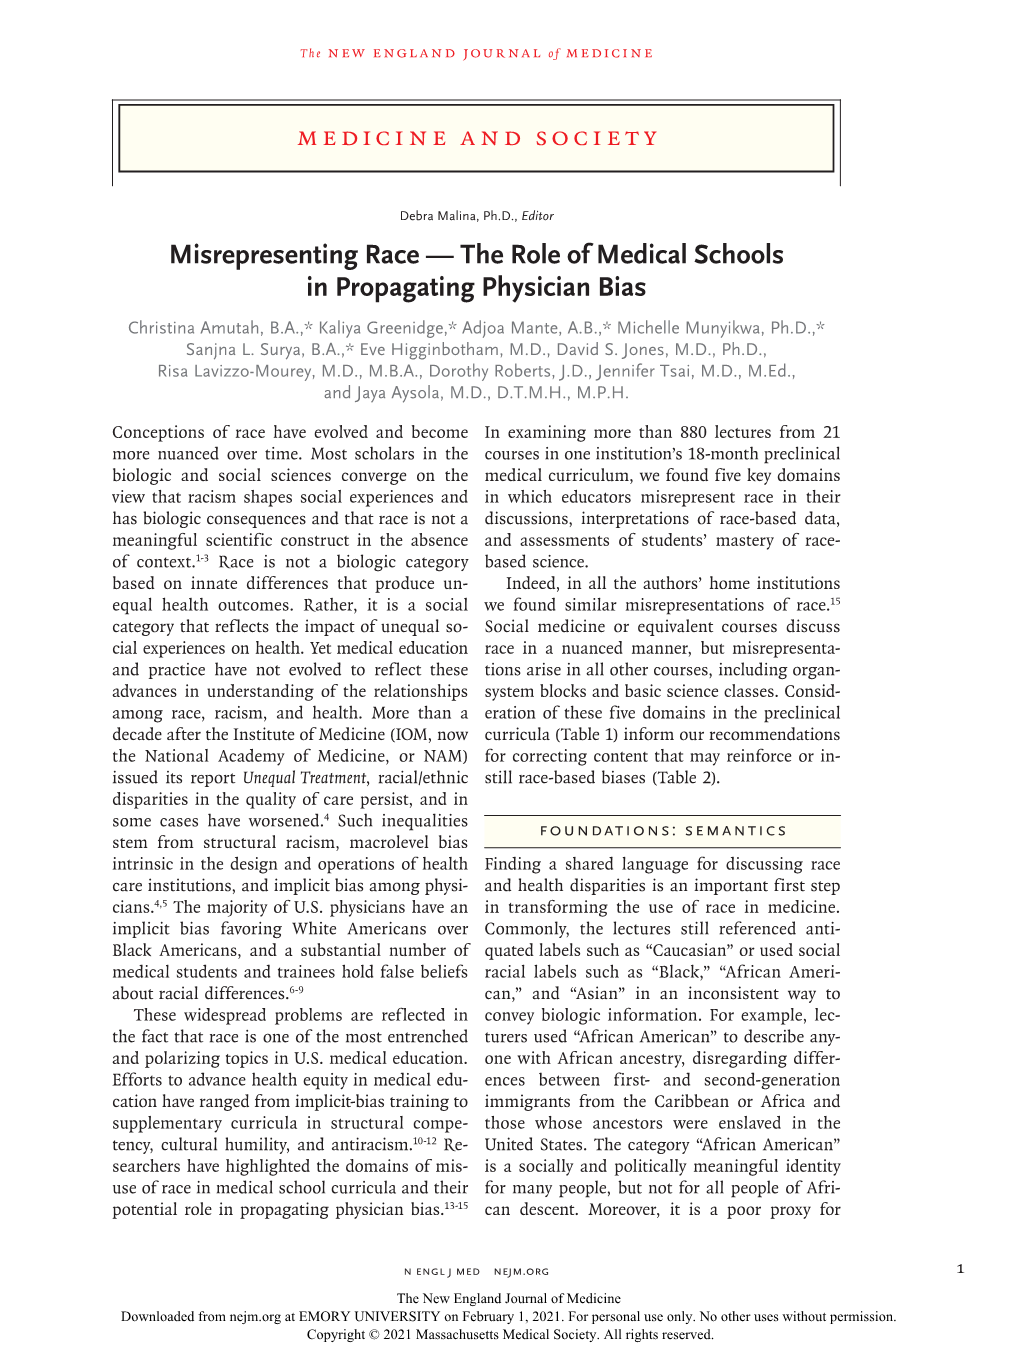 The Role of Medical Schools in Propagating Physician Bias Christina Amutah, B.A.,* Kaliya Greenidge,* Adjoa Mante, A.B.,* Michelle Munyikwa, Ph.D.,* Sanjna L